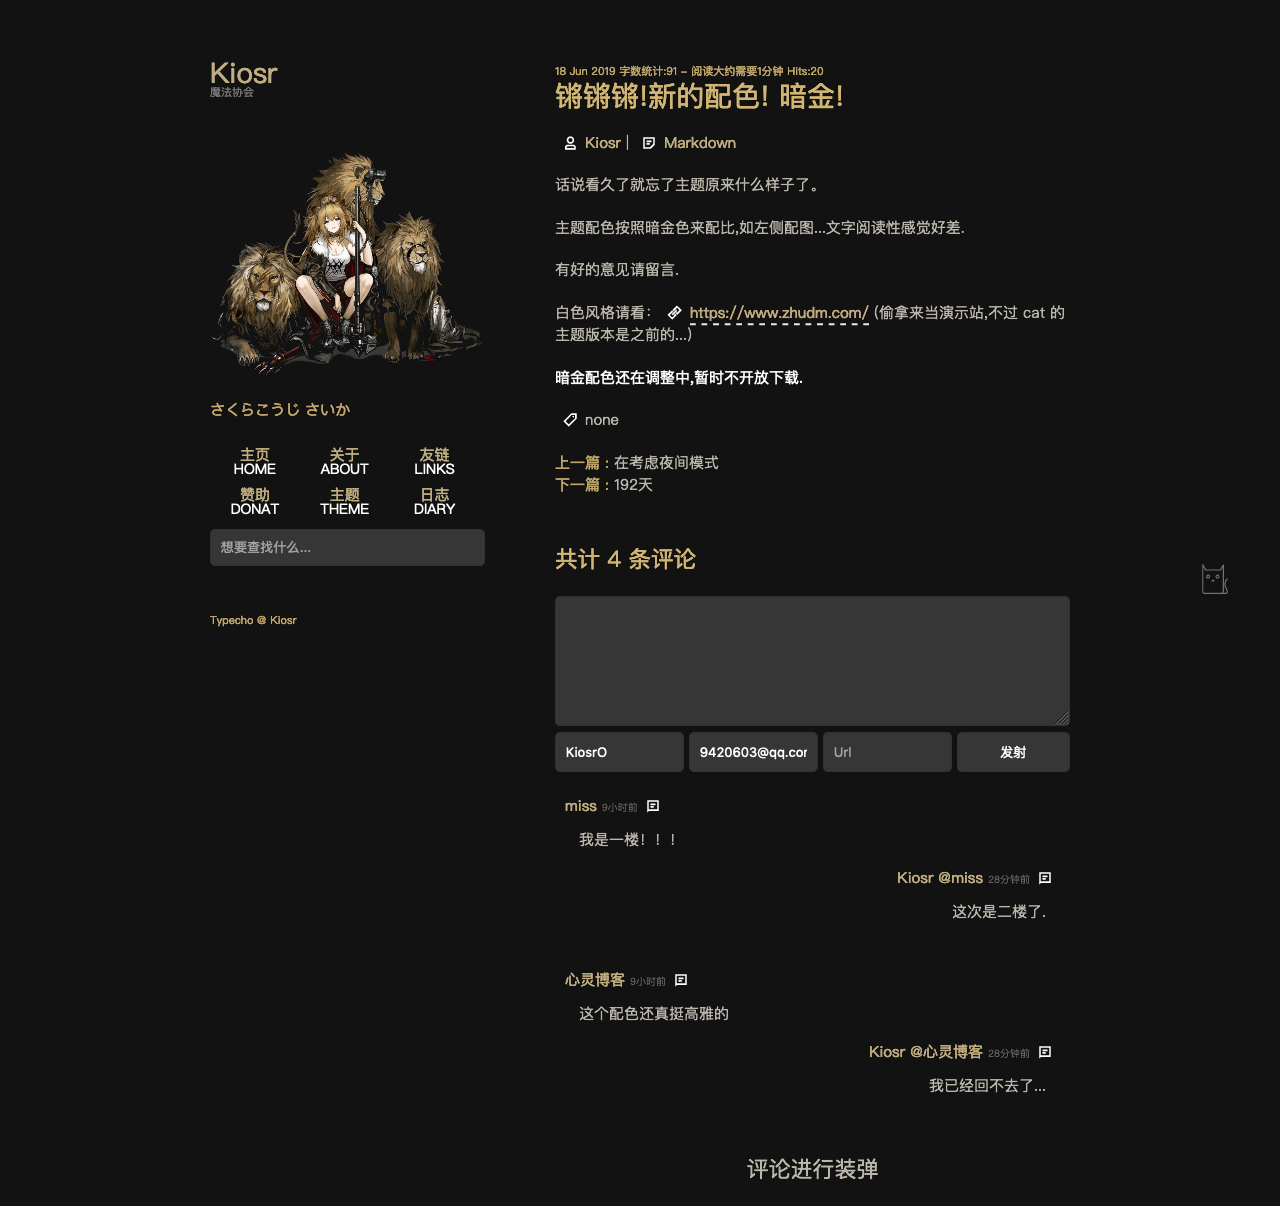 Screenshot_2019-06-18 锵锵锵 新的配色 暗金 - OAO(1).png